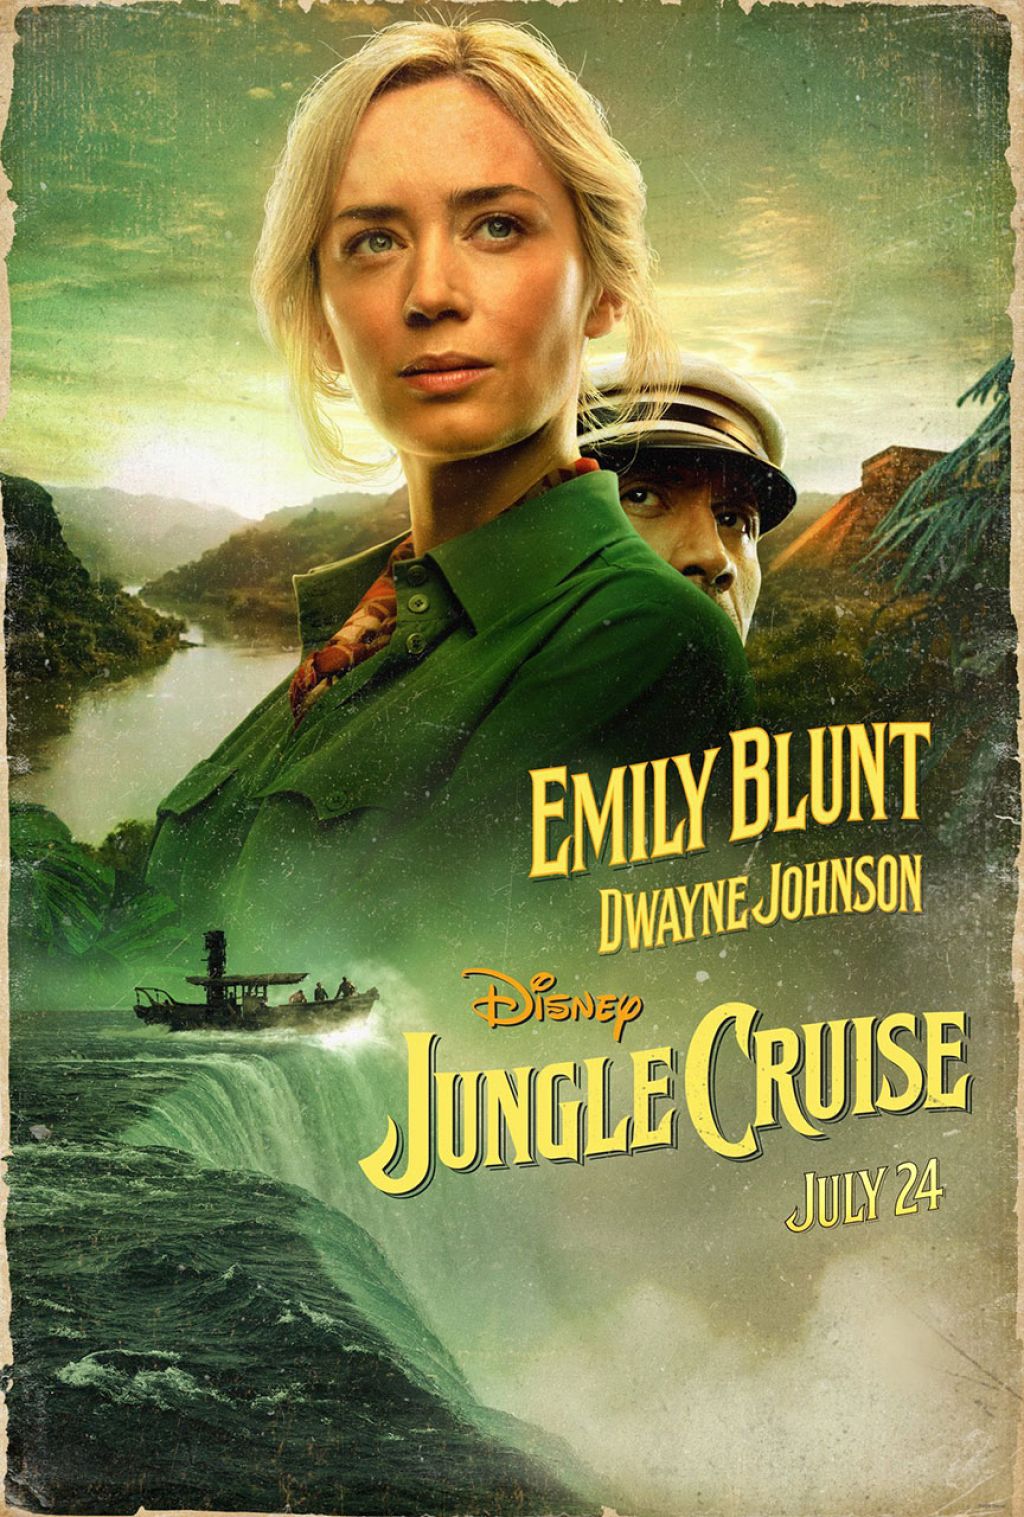 jungle cruise movie actress